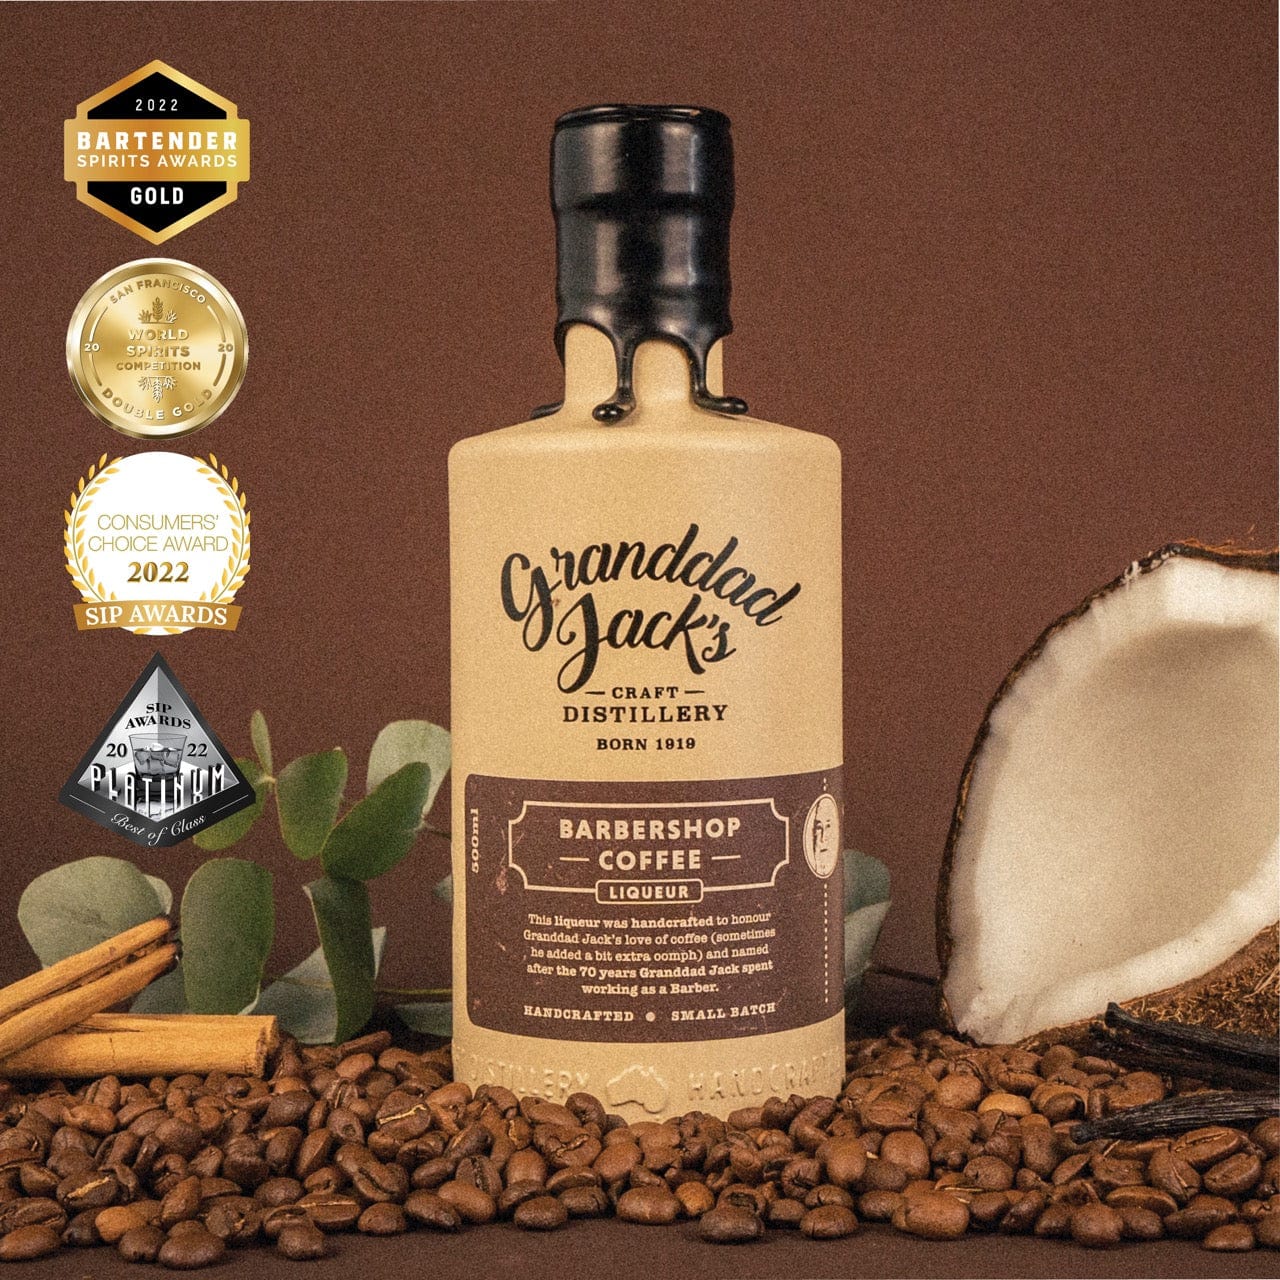 Barbershop Coffee Liqueur - Granddad Jack's Craft Distillery